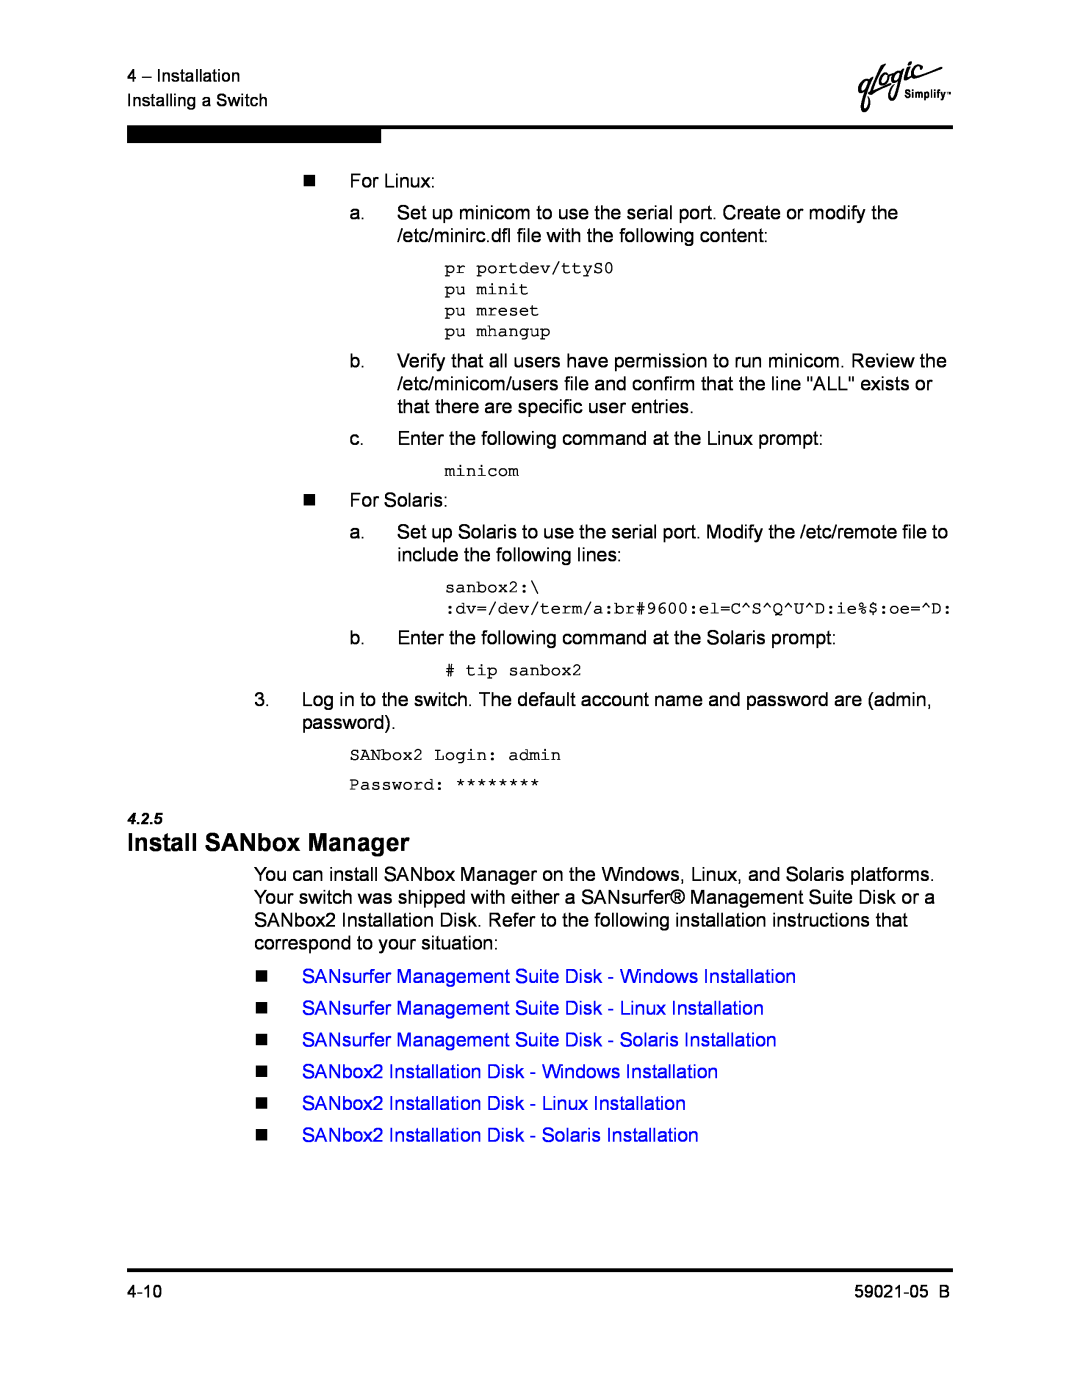 Q-Logic 59021-05 B manual Install SANbox Manager, „ SANsurfer Management Suite Disk - Windows Installation 